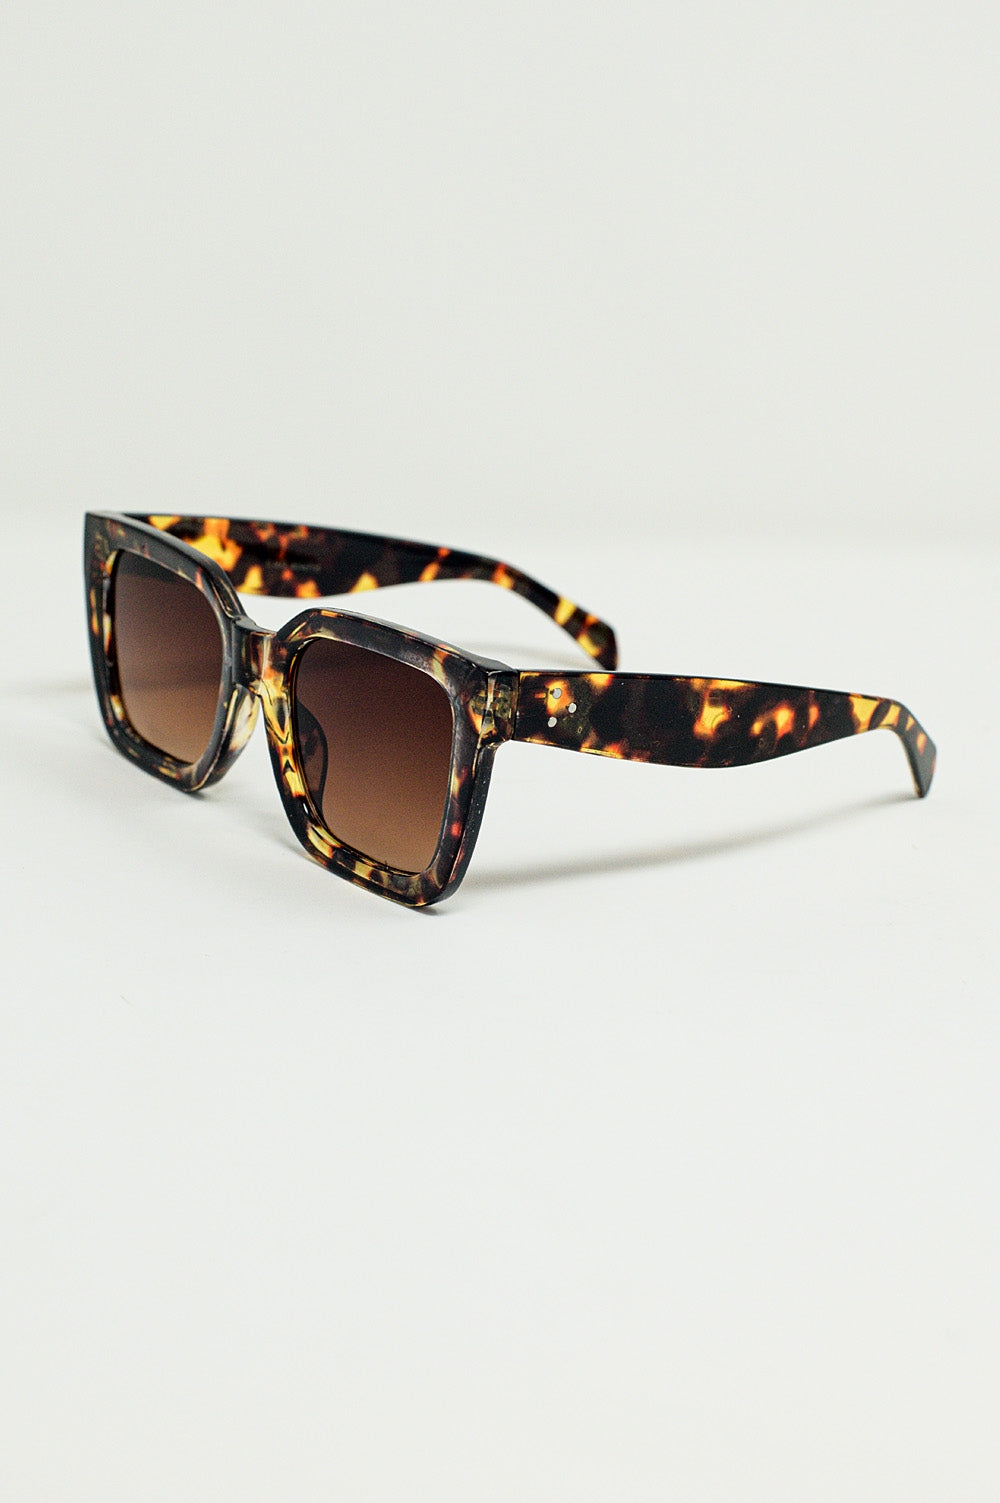 Q2 Elongated Squared Sunglasses With Dark Lenses in Tortoise Shell